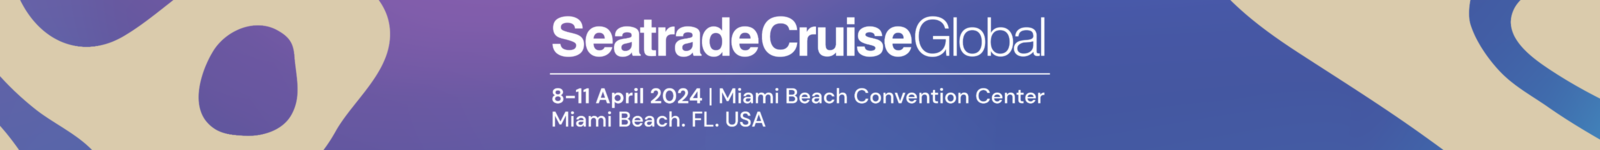 Seatrade Cruise Global 2024 logo